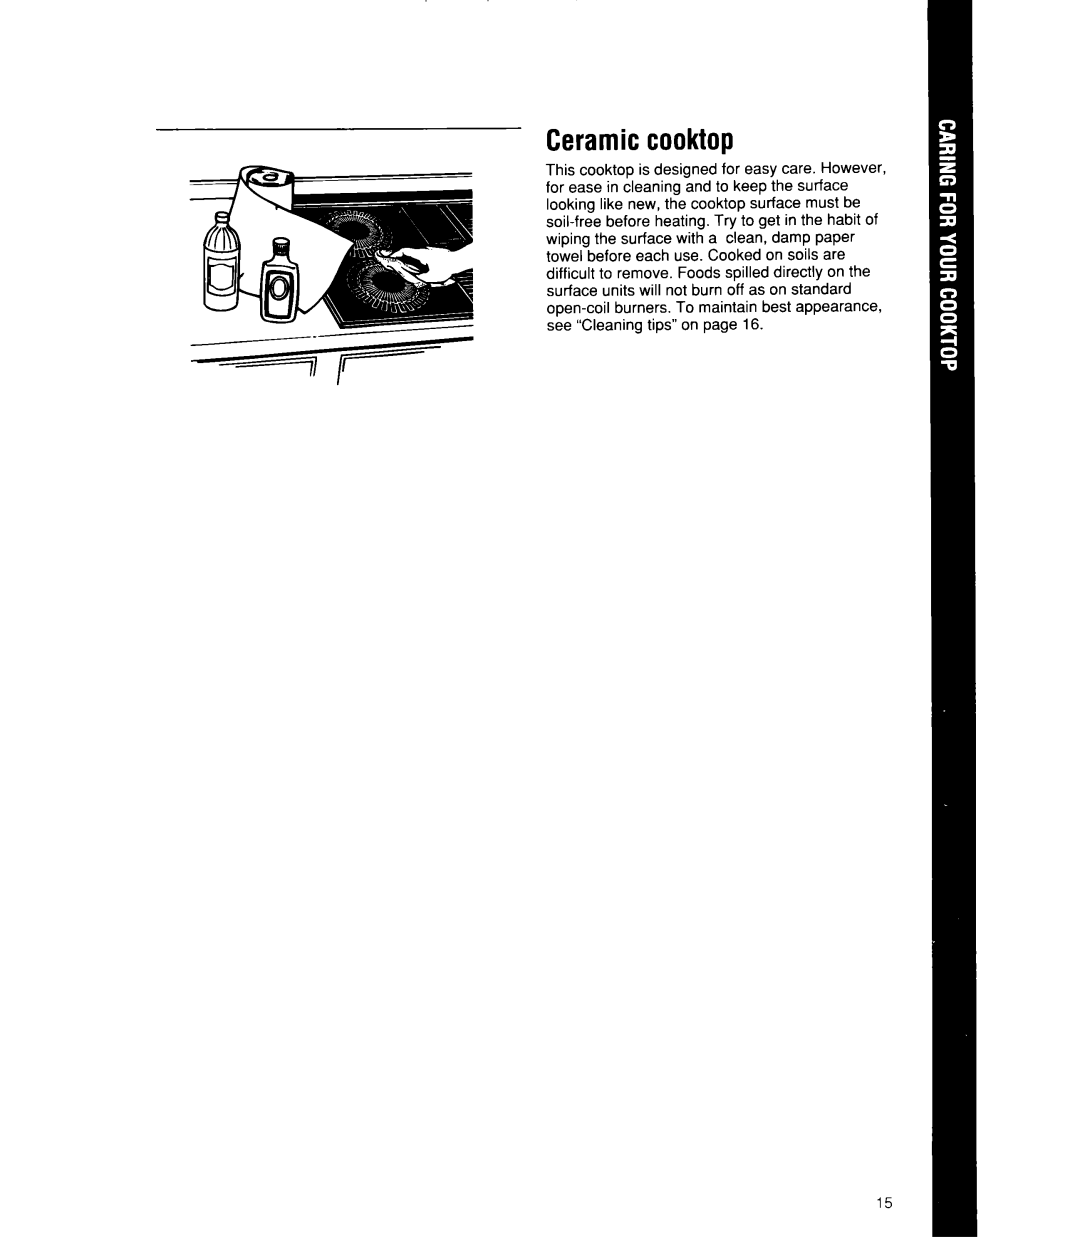 Whirlpool RC8900XX manual Ceramiccooktop 